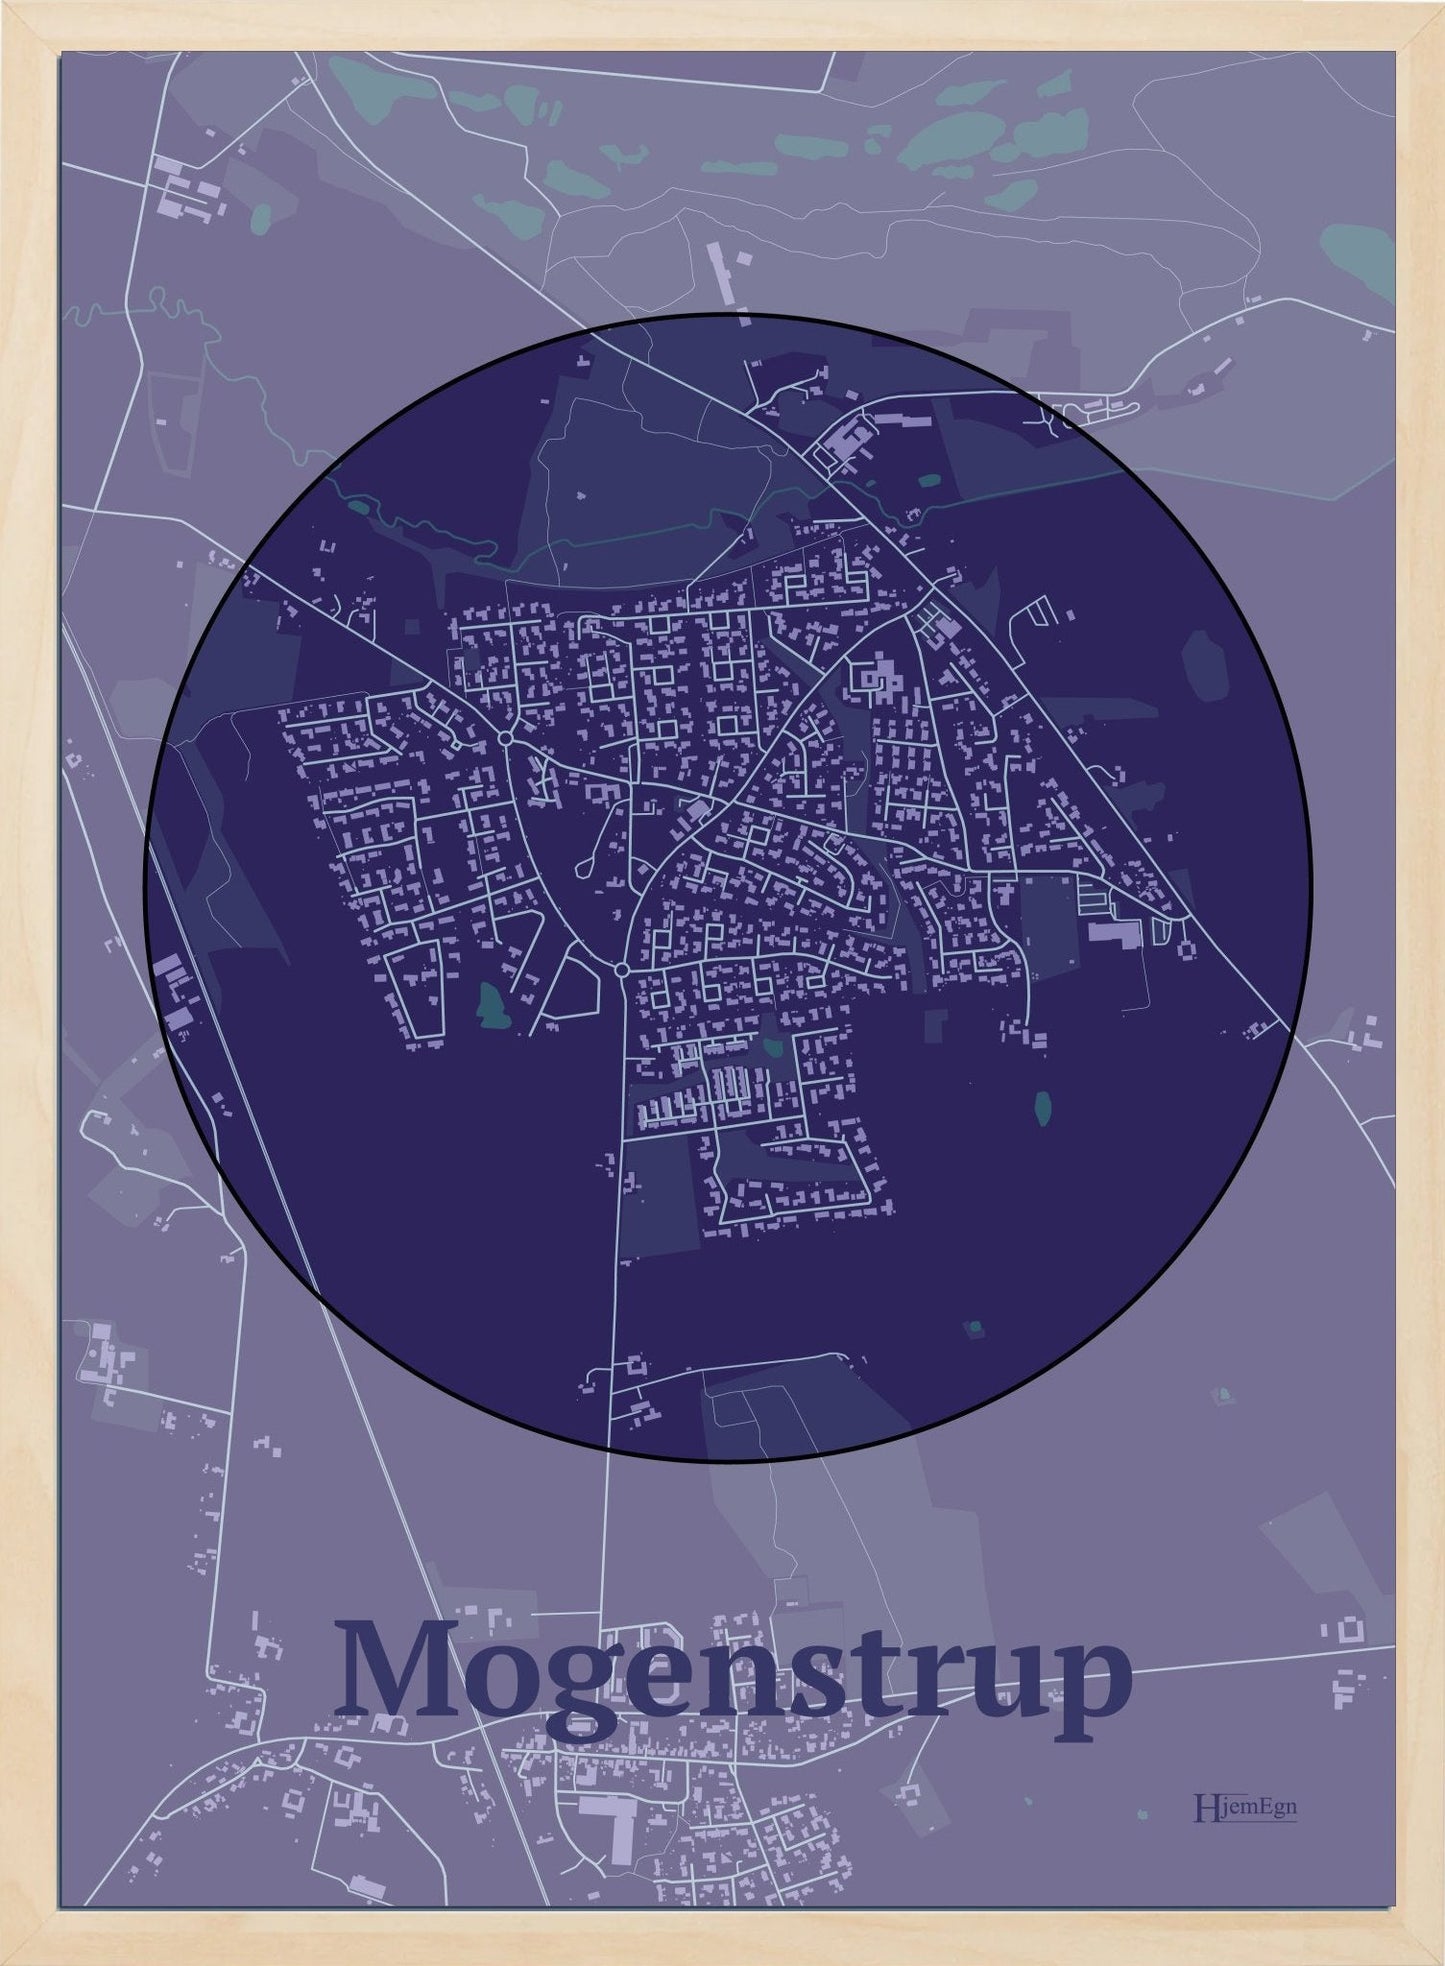 Mogenstrup plakat i farve mørk lilla og HjemEgn.dk design centrum. Design bykort for Mogenstrup